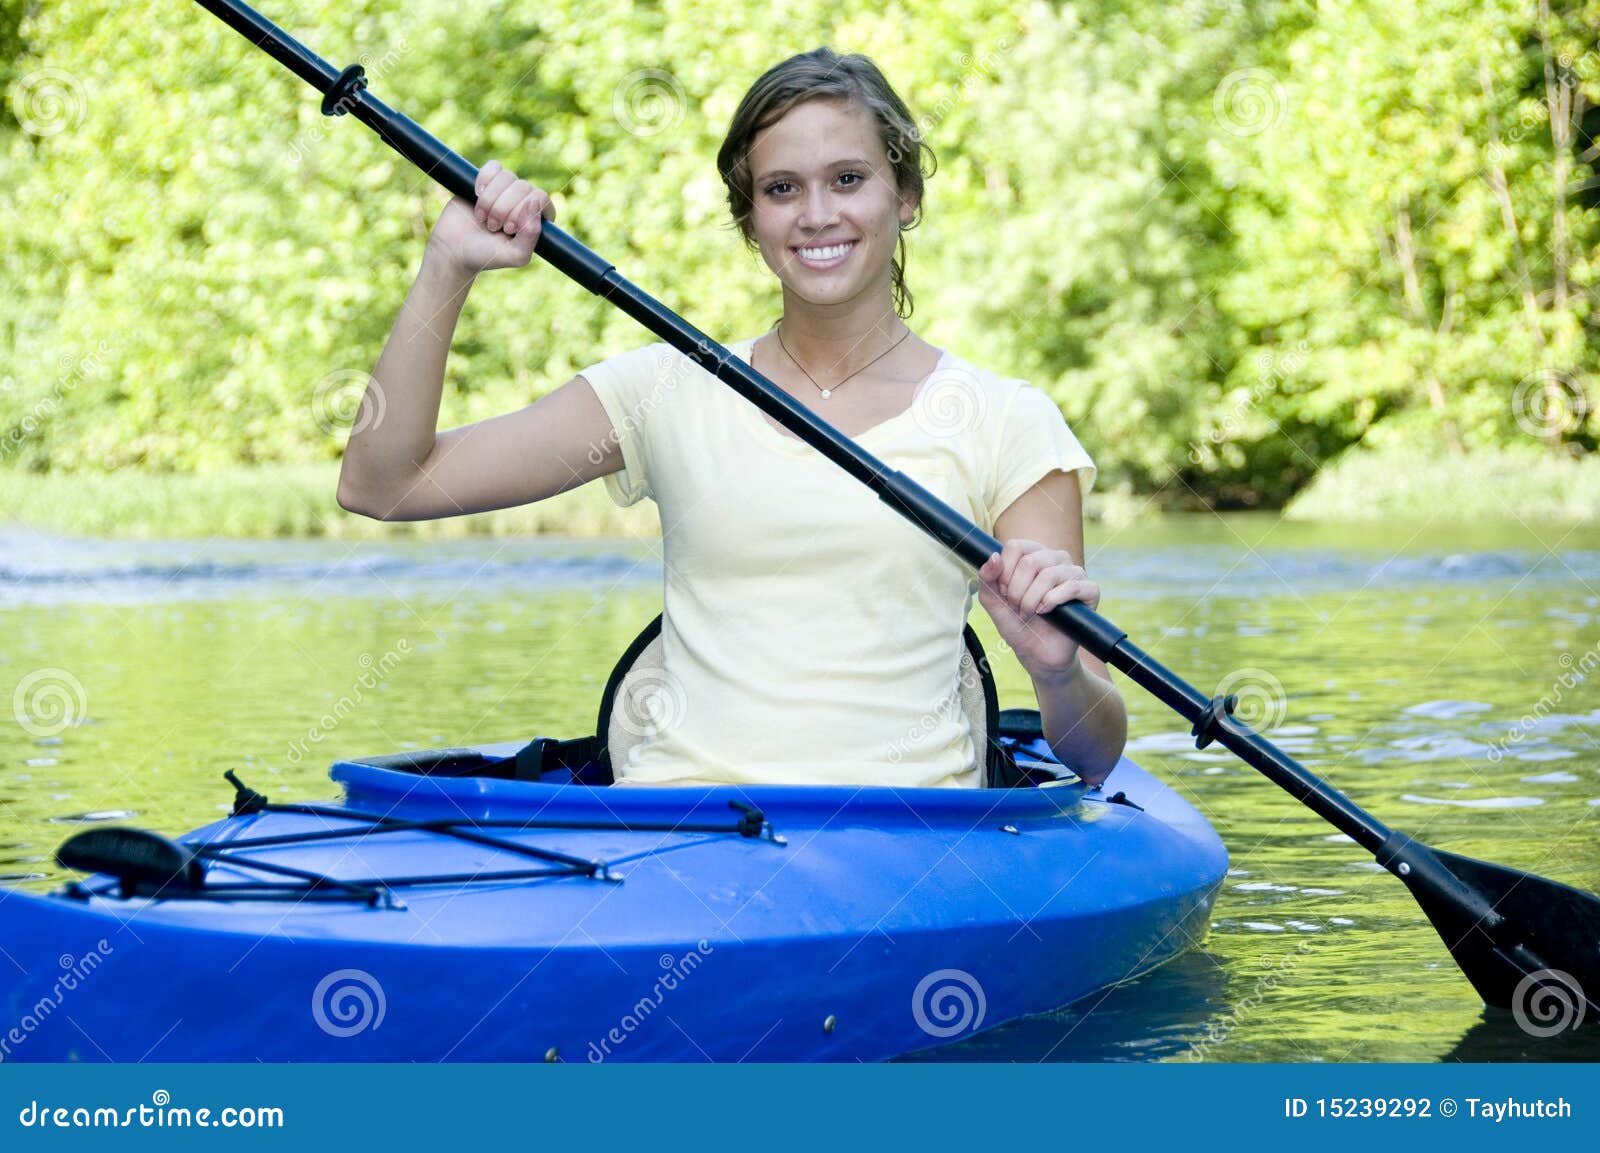 female kayak clipart - photo #40